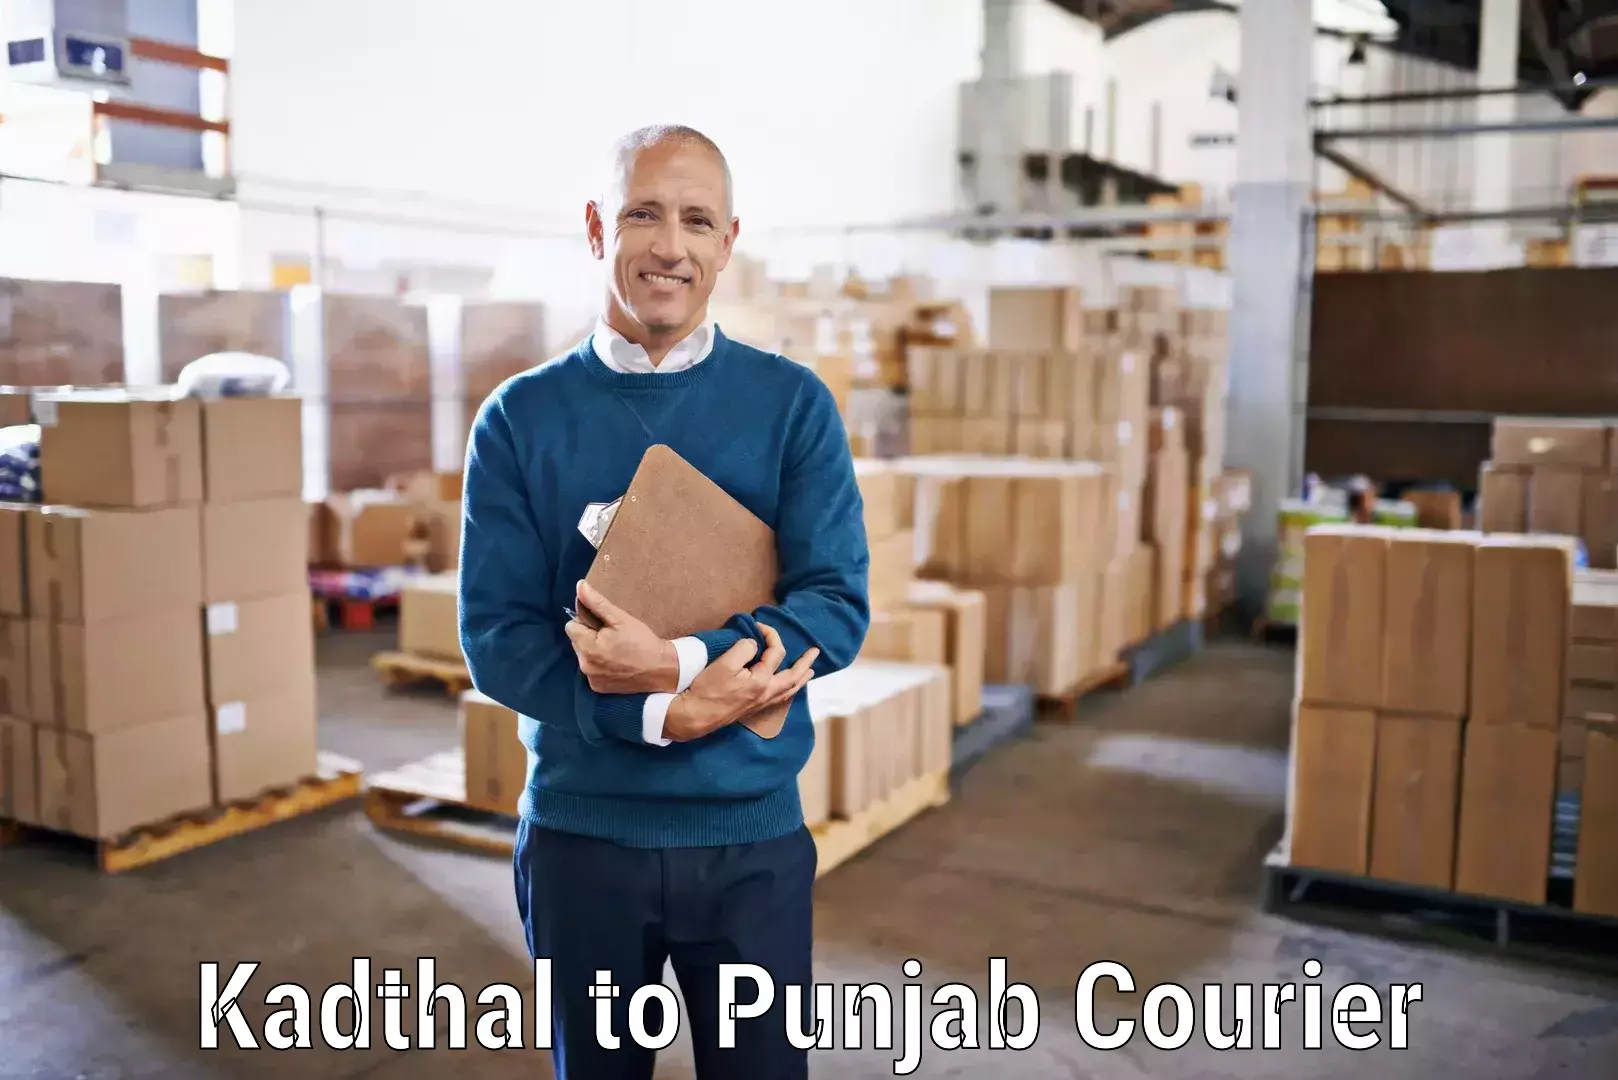 Professional courier handling Kadthal to Punjab